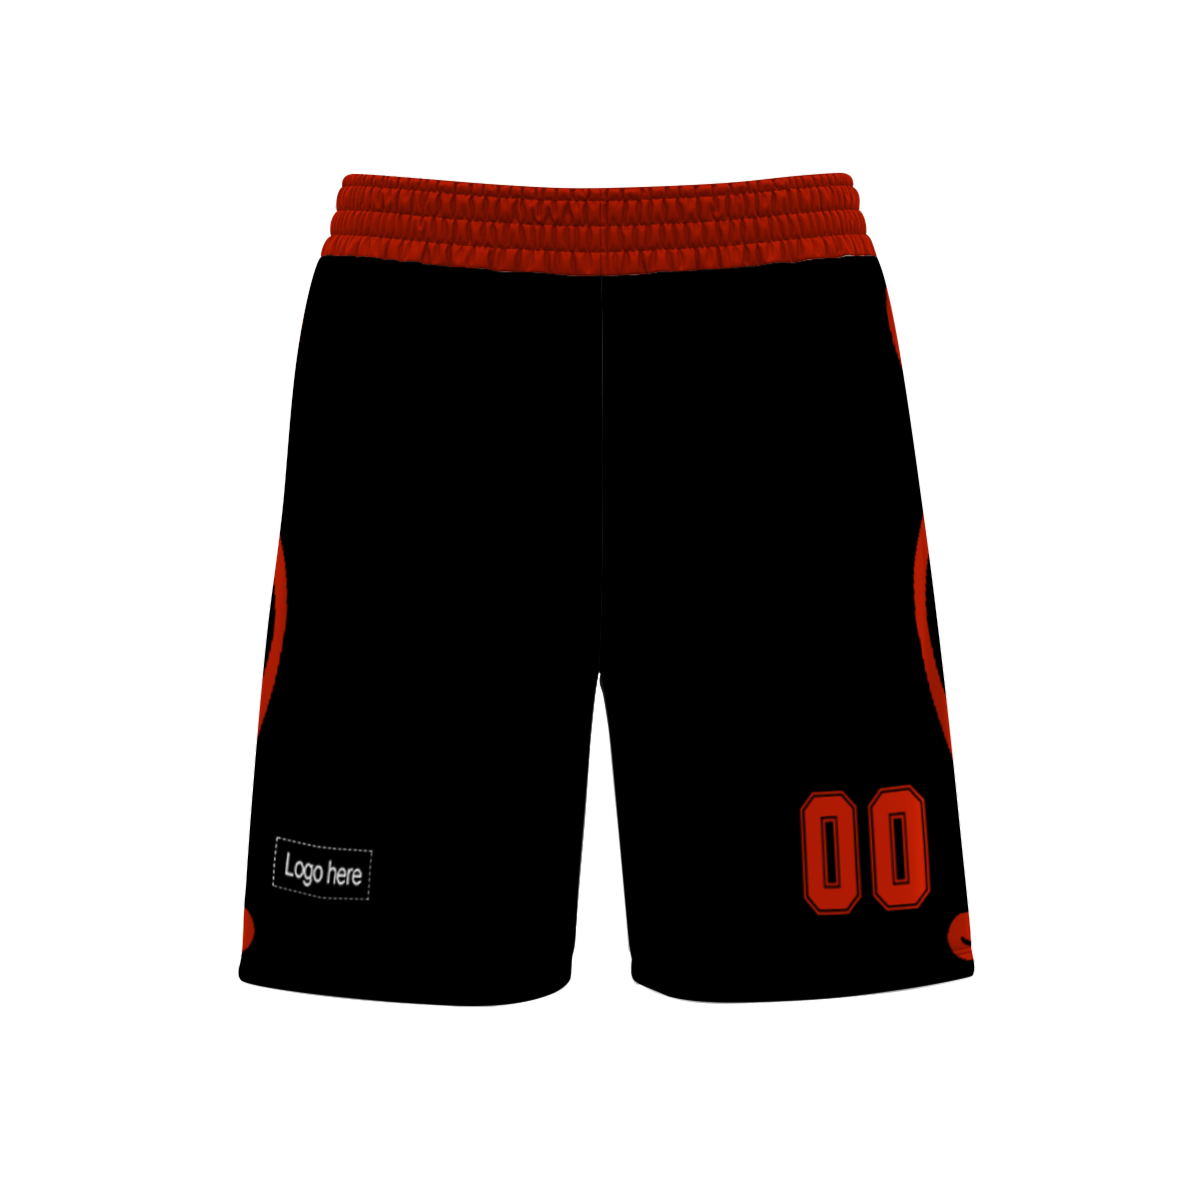 oem-custom-quick-dry-basketball-wear-personalized-design-sublimation-basketball-uniform-jerseys-at-cj-pod-7